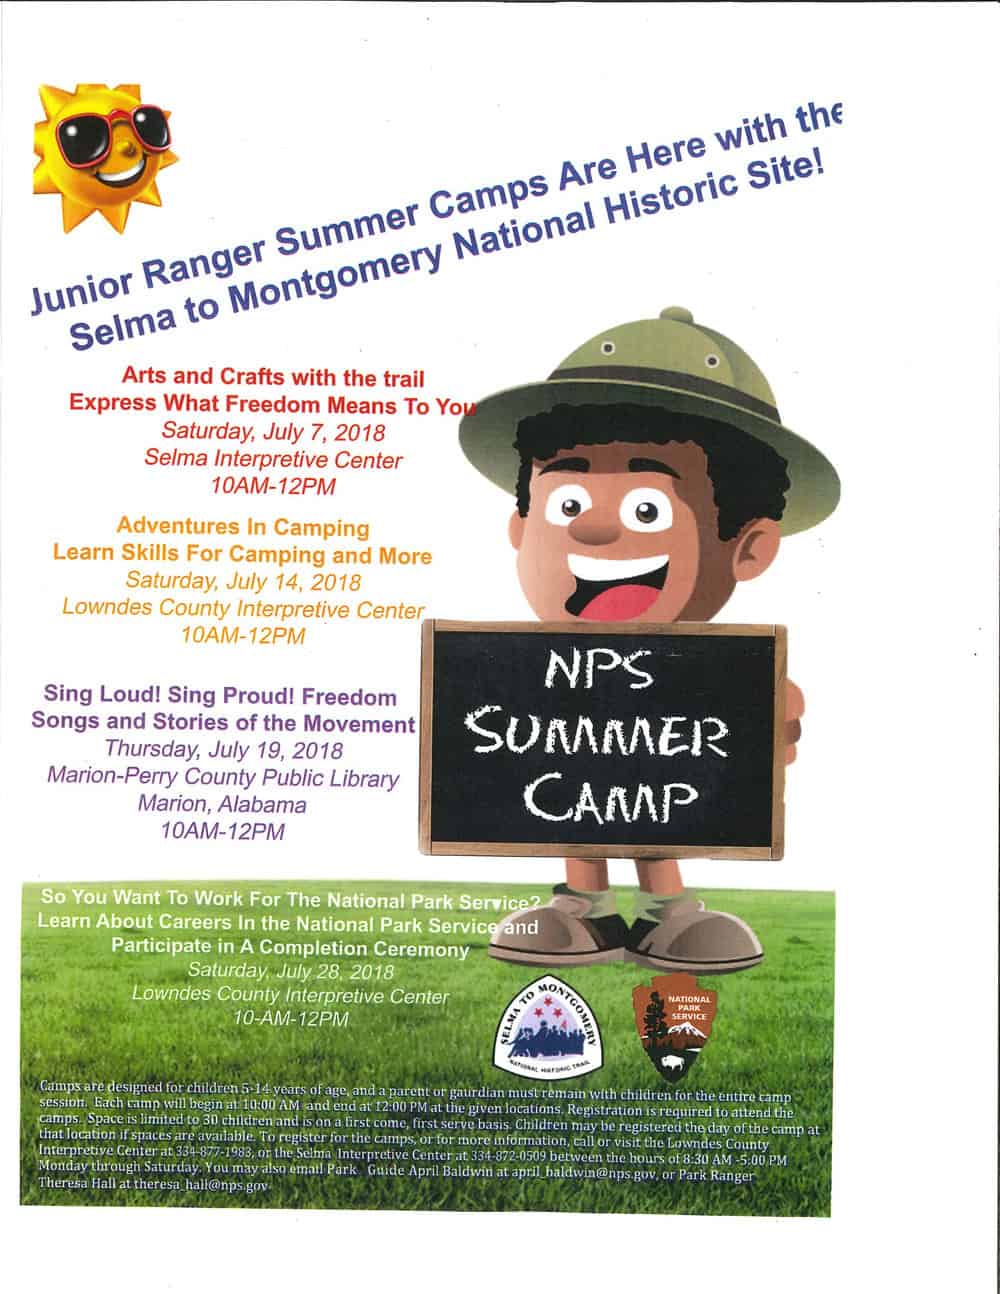 Junior Ranger Camps